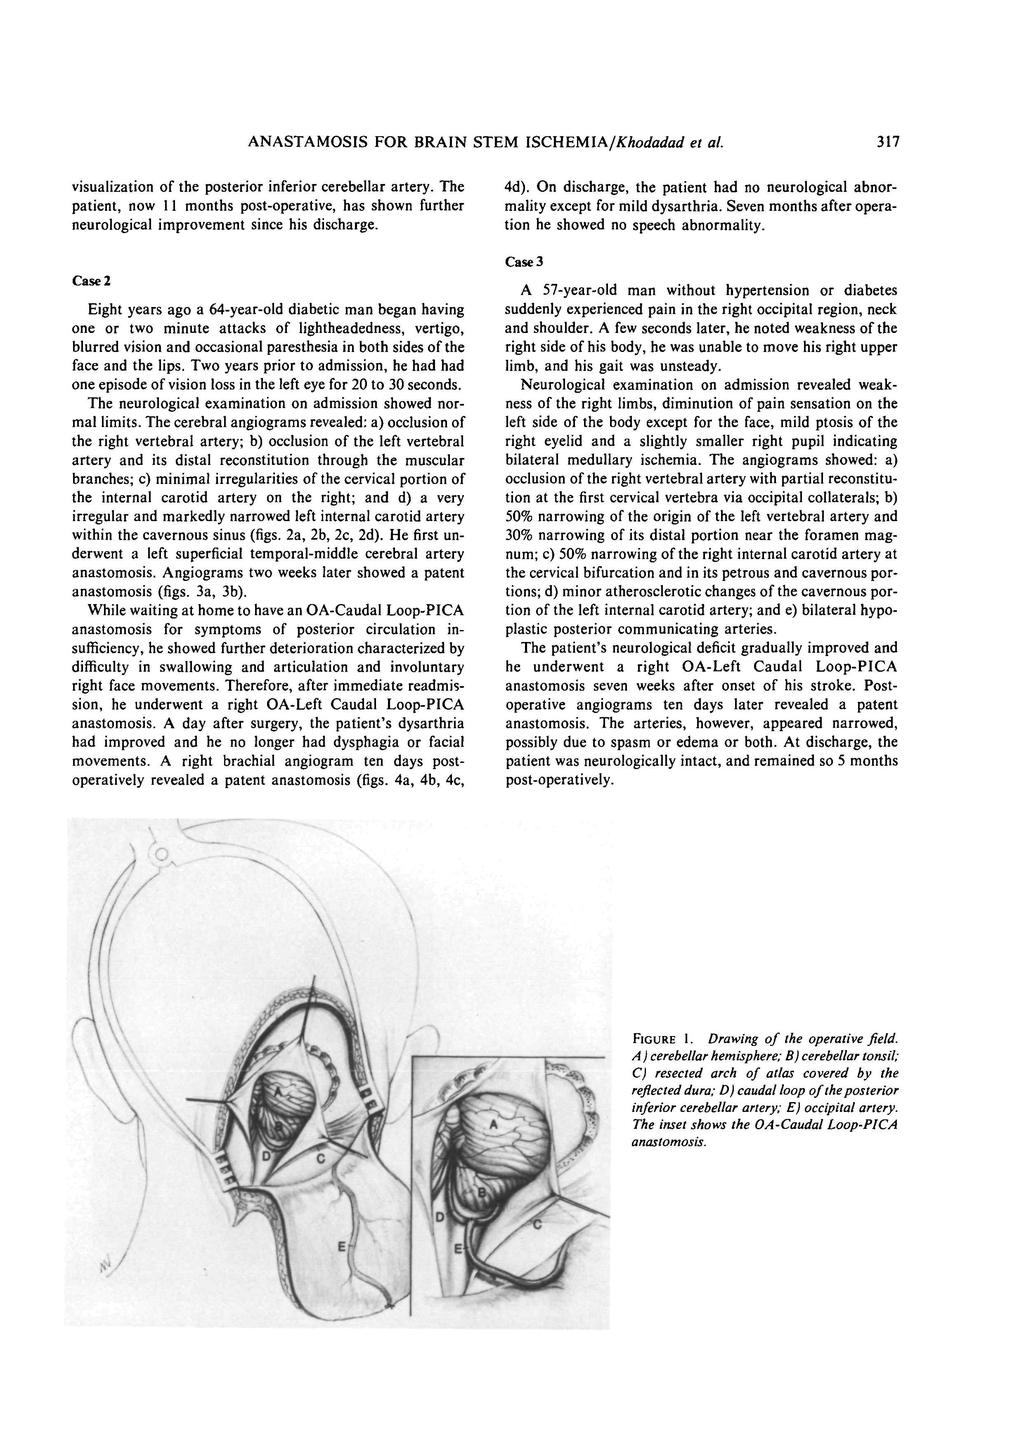 ANASTAMOSIS FOR BRAIN STEM ISCHEMIA/Khodadad et al. visualization of the posterior inferior cerebellar artery.